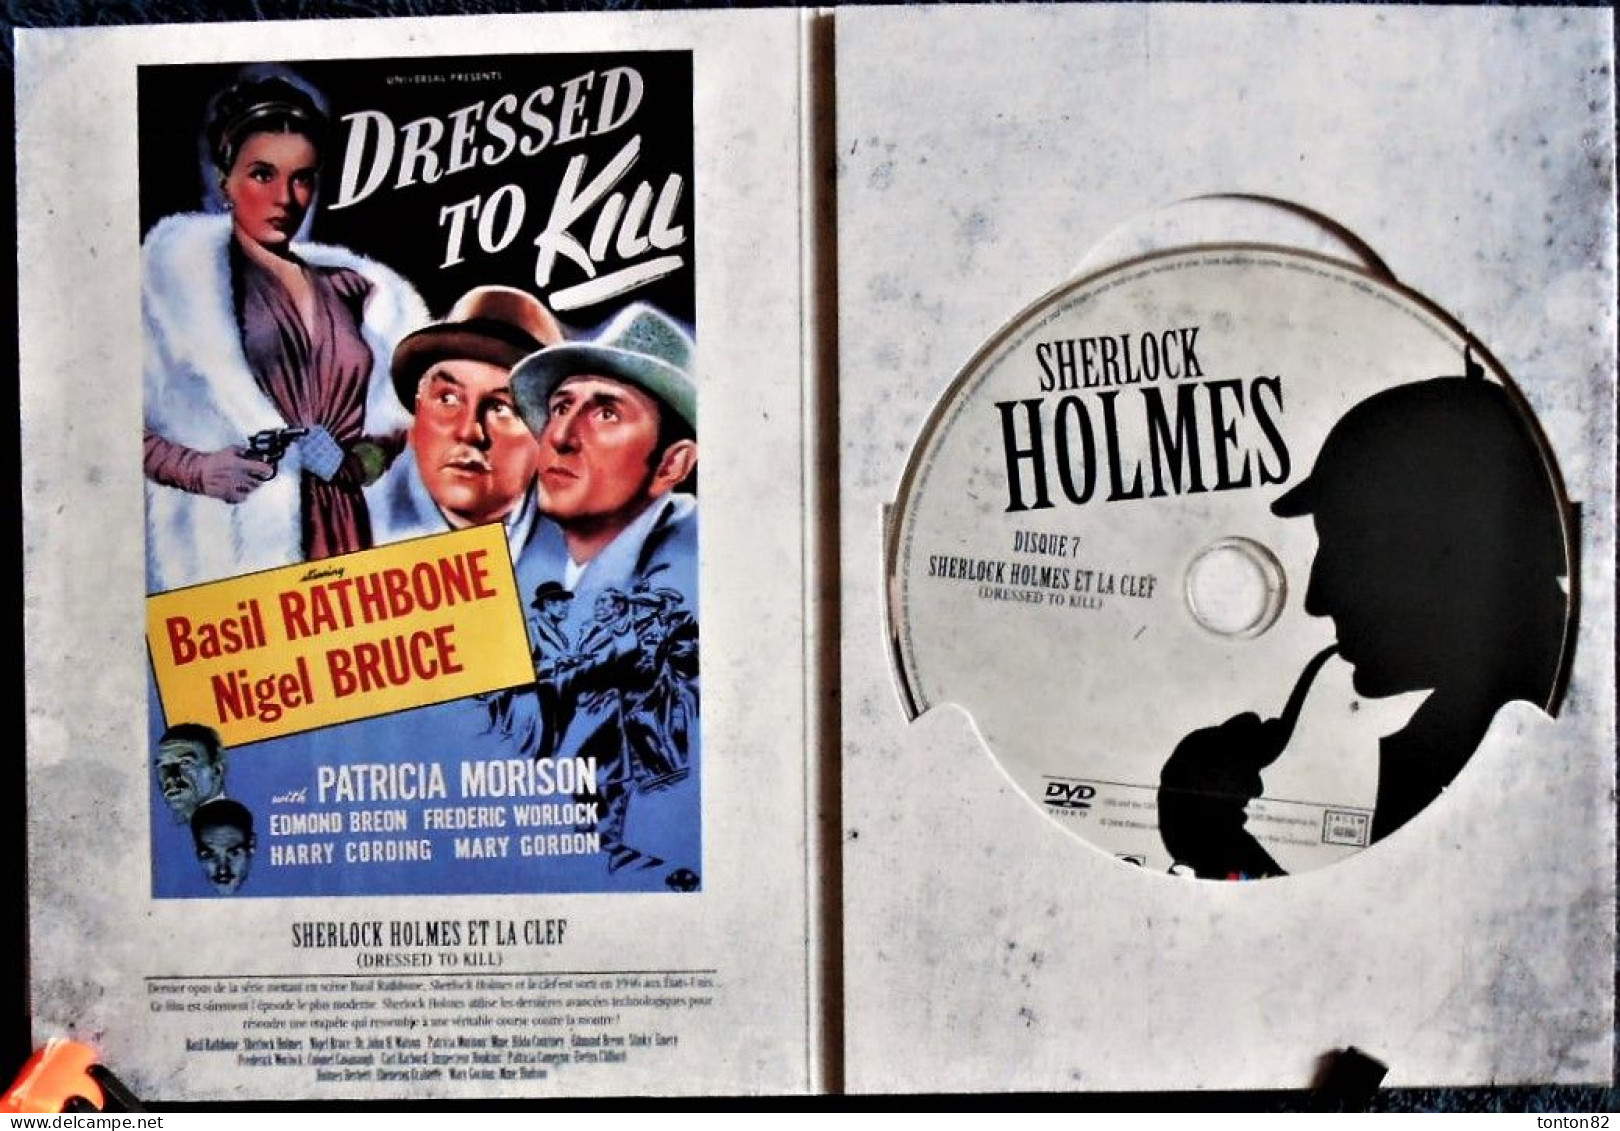 SHERLOCK HOLMES -  Basil Rathbone  - Nigel Bruce - Coffret 7 DVD - Avec rappel de l'affiche en couleur .